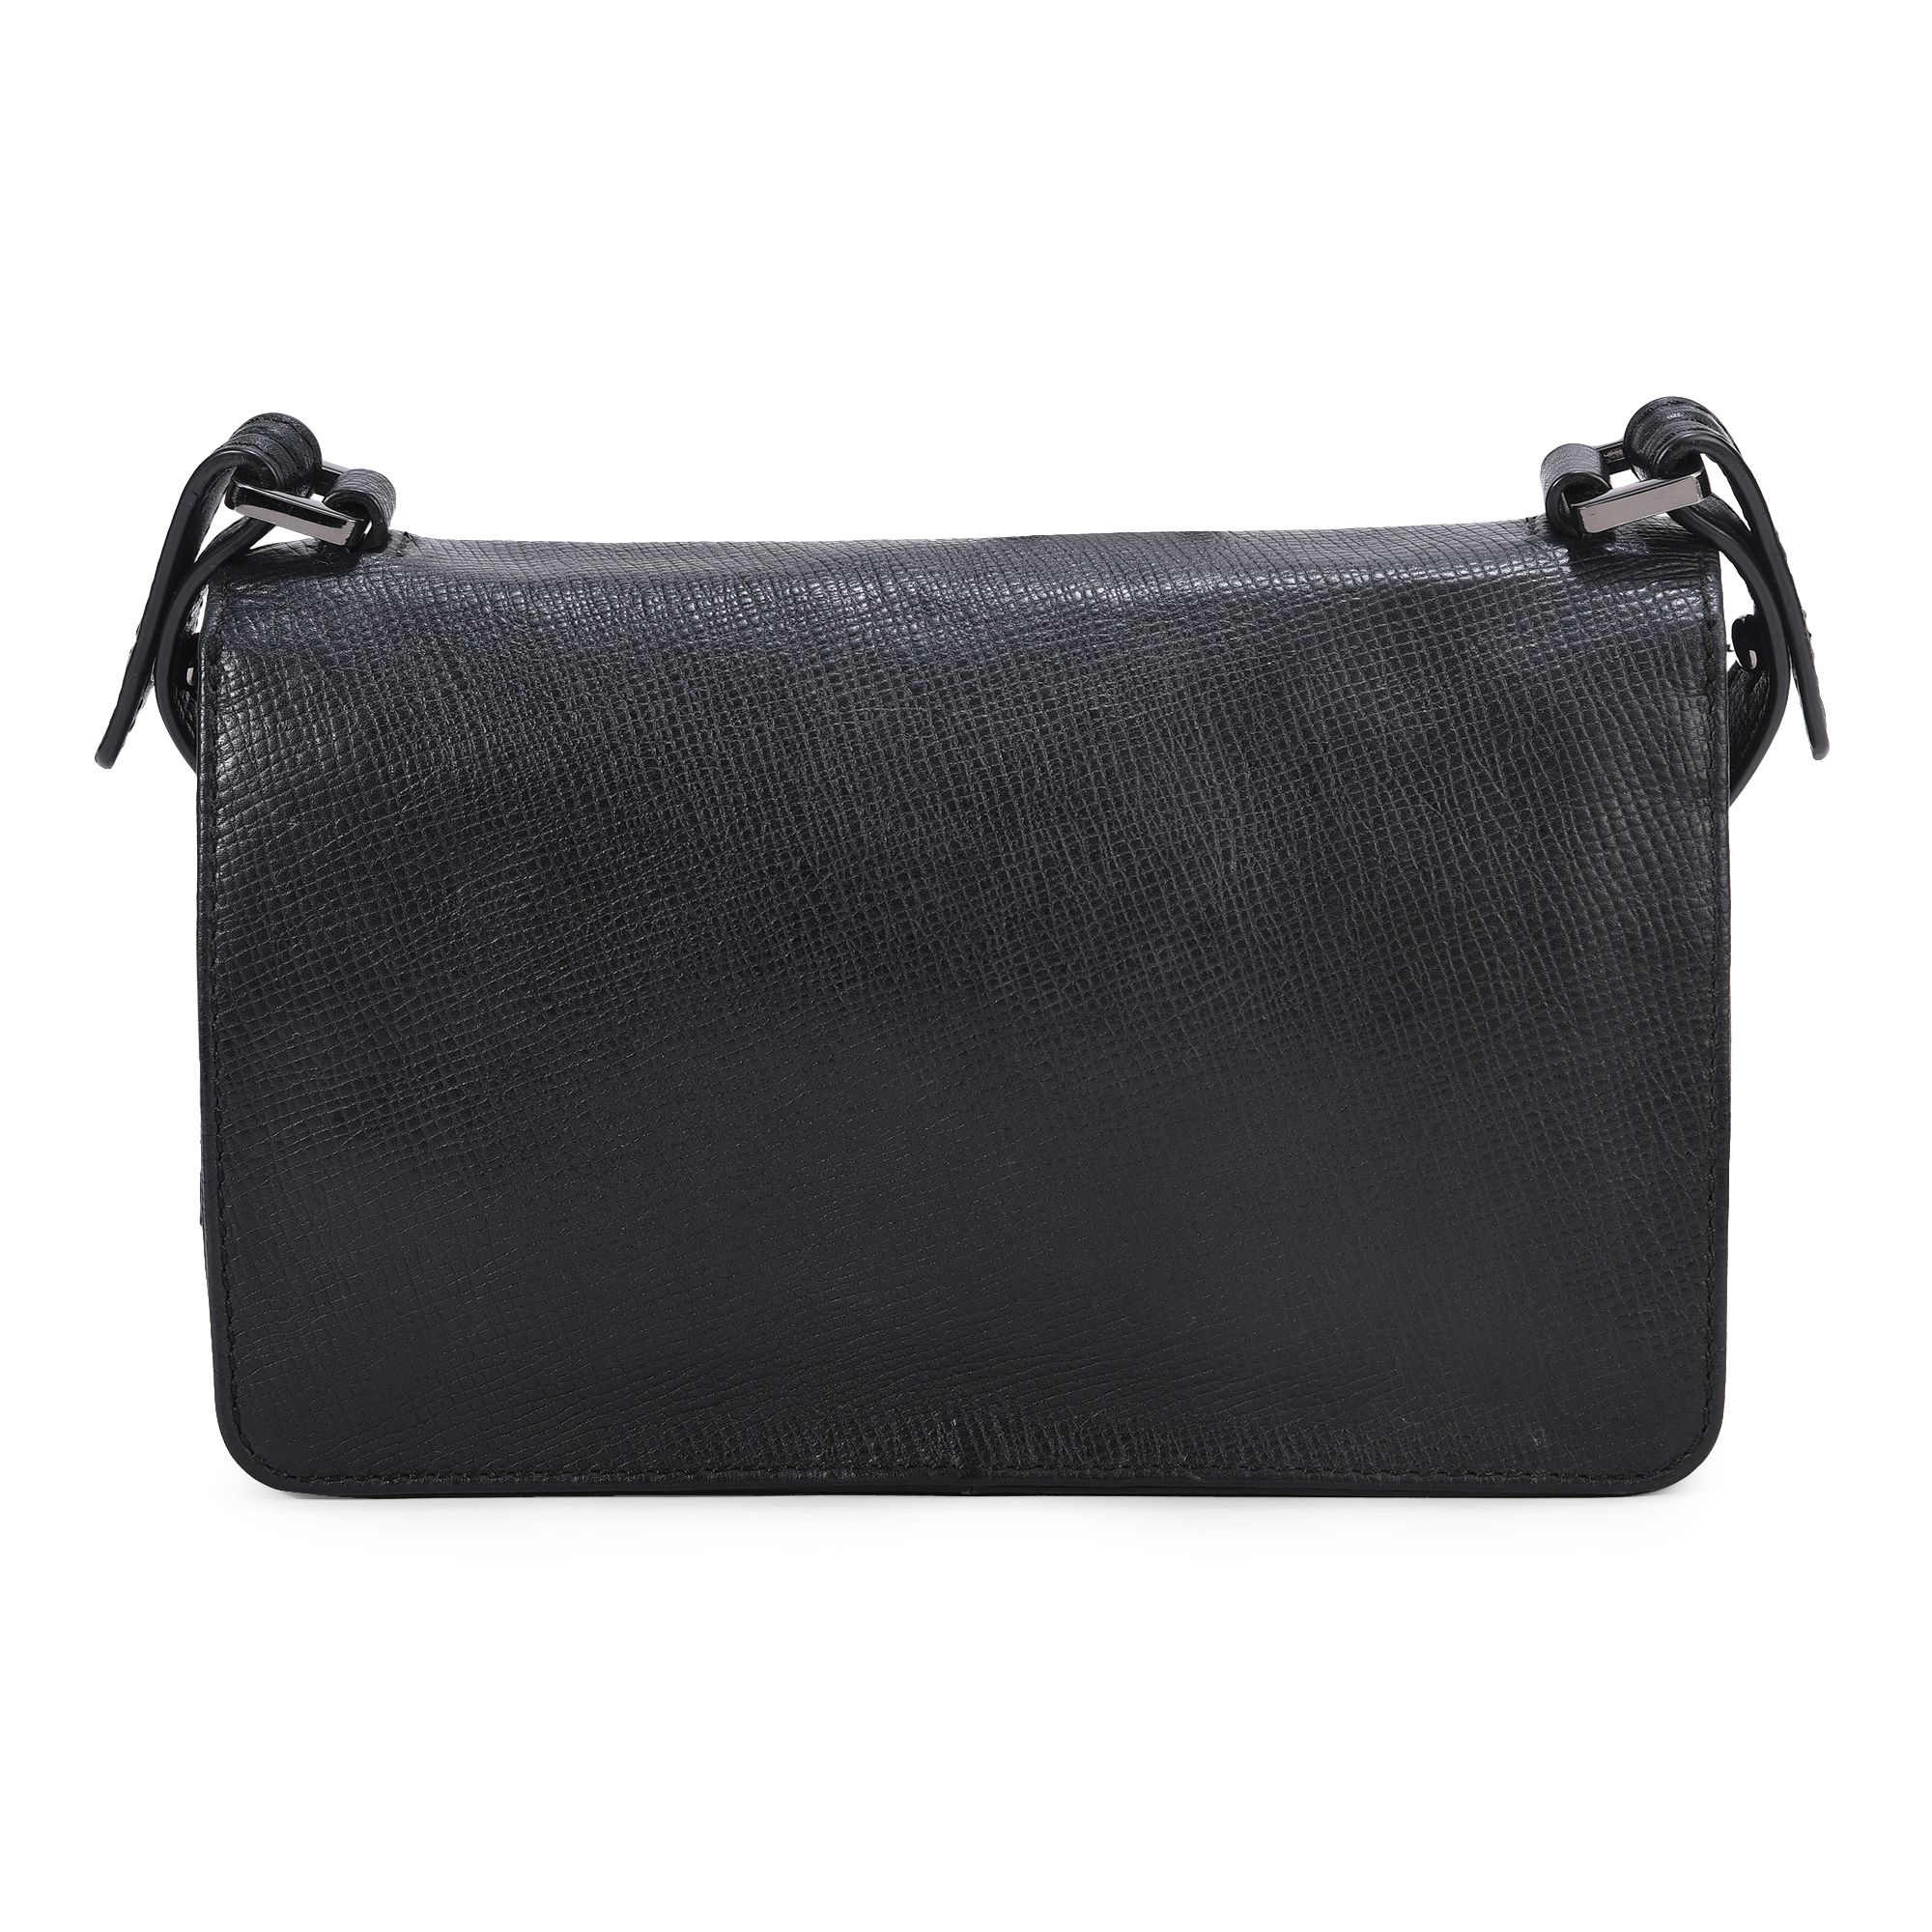 BLACK leather bag for women